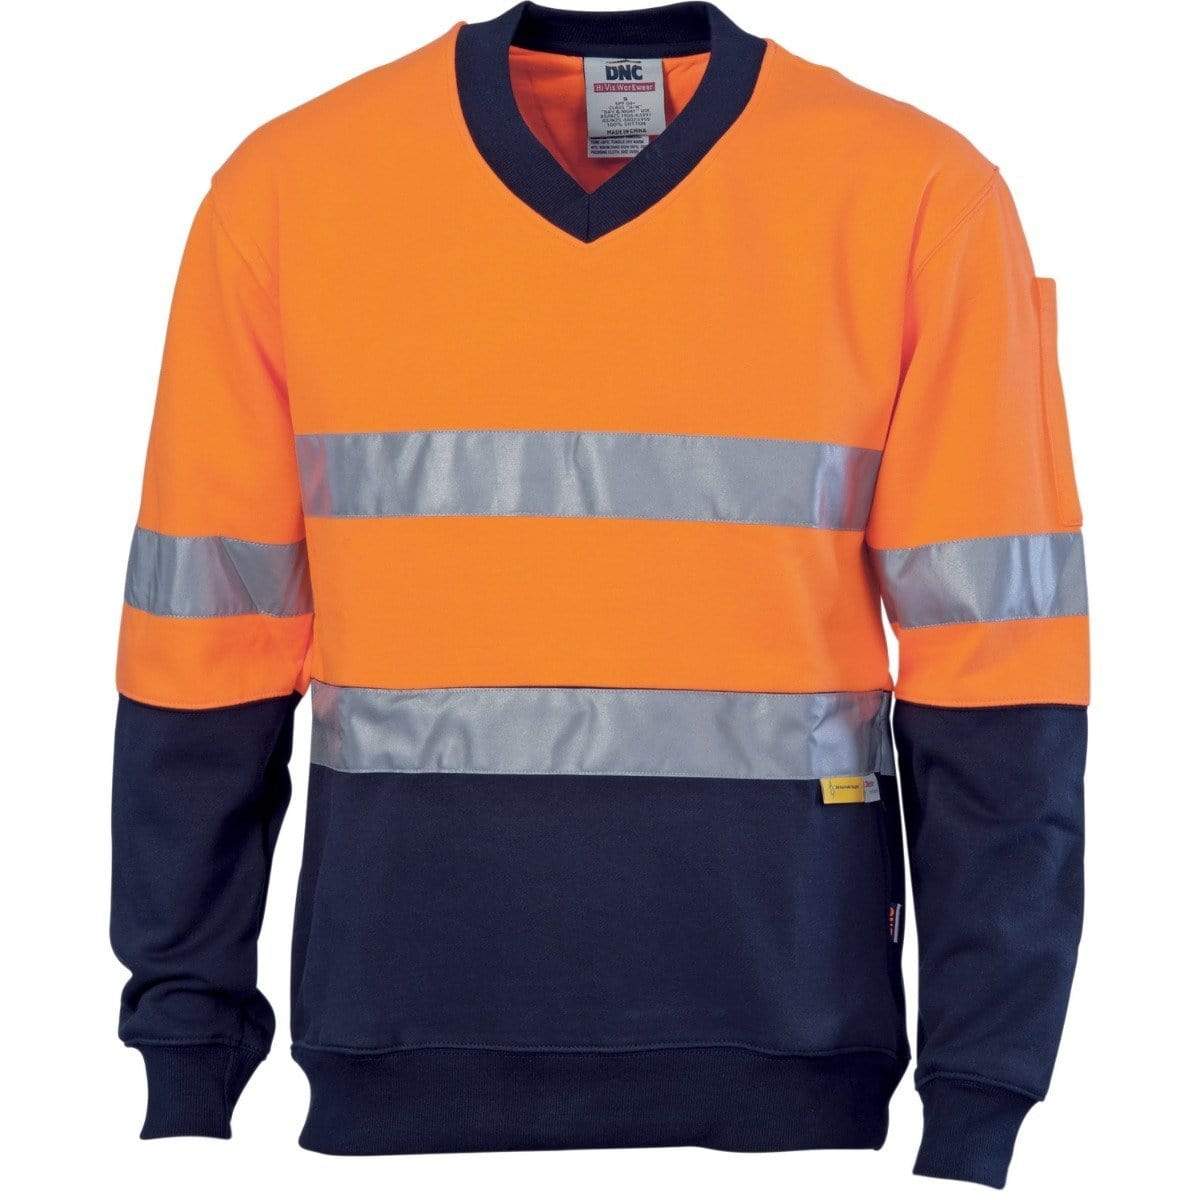 Dnc Workwear Hi-vis Two-tone Cotton Fleecy V-neck Sweatshirt With 3m R/tape - 3924 Work Wear DNC Workwear Orange/Navy 5XL 